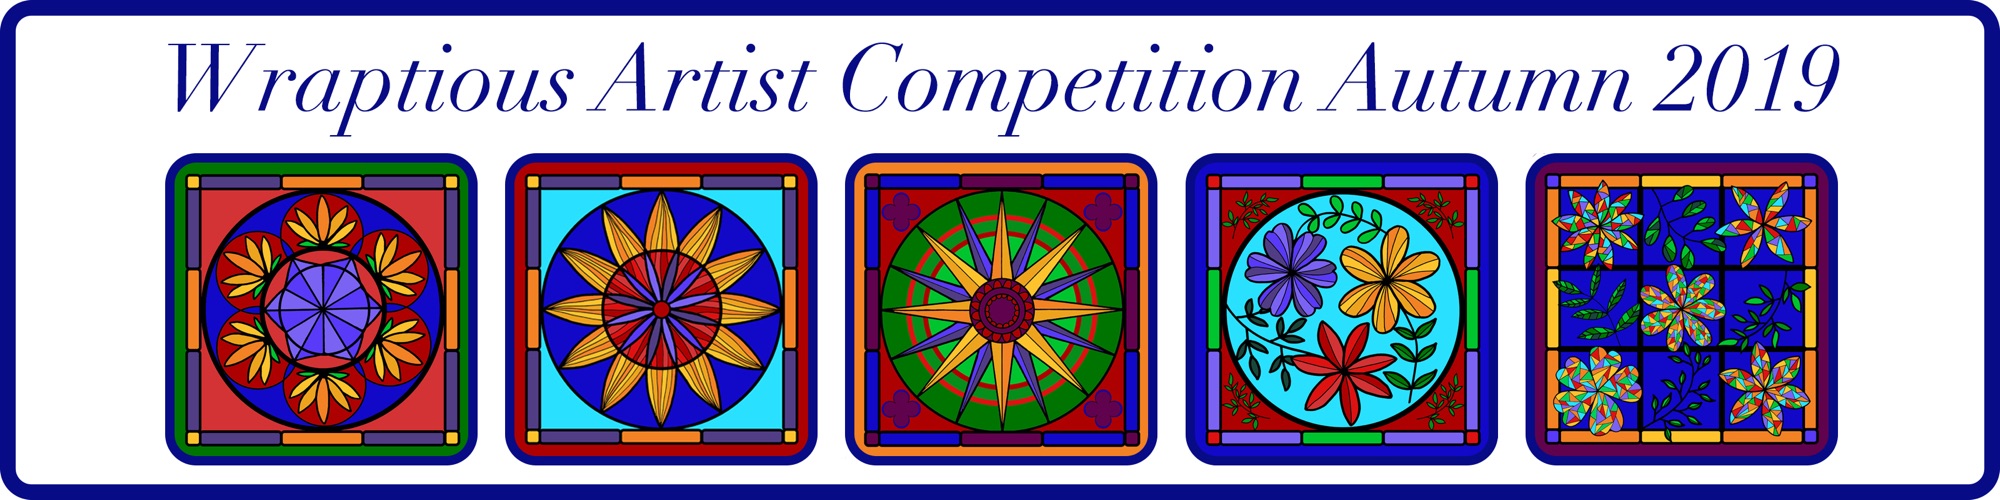 Wraptious-Autumn-competition-blog-title